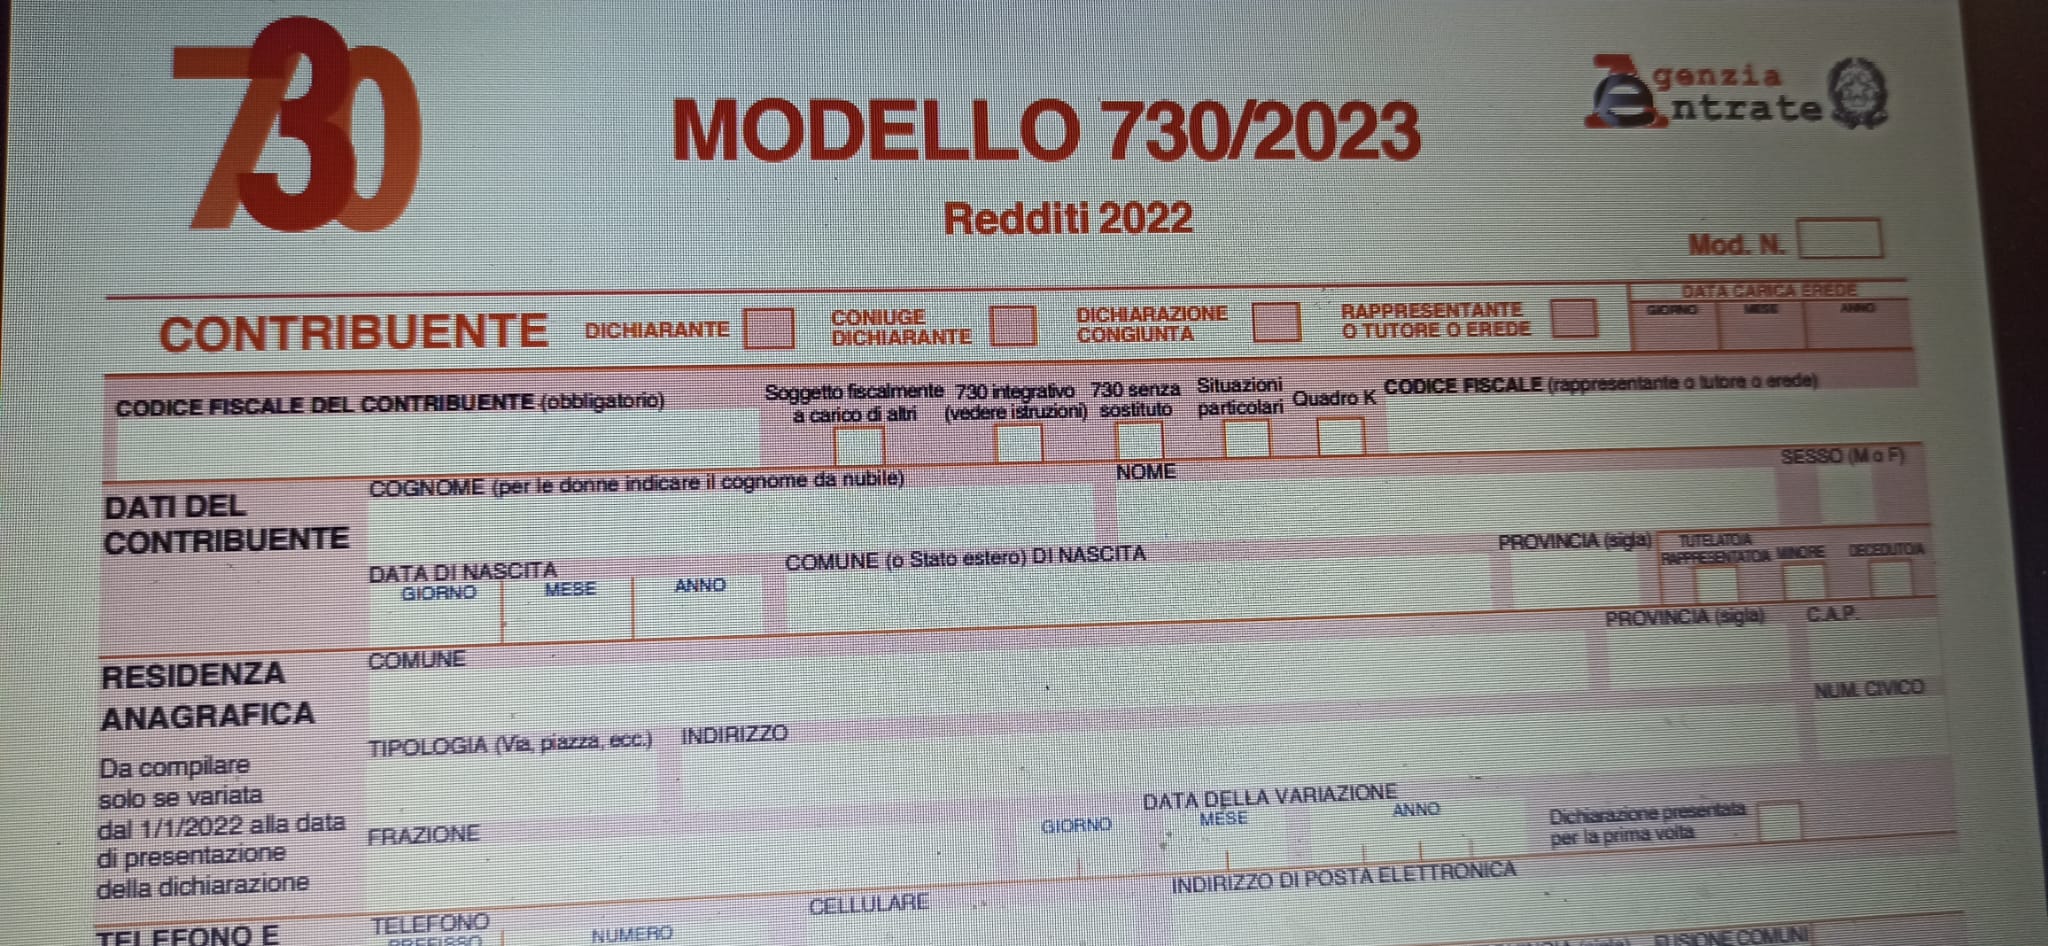 Modello730 2023 